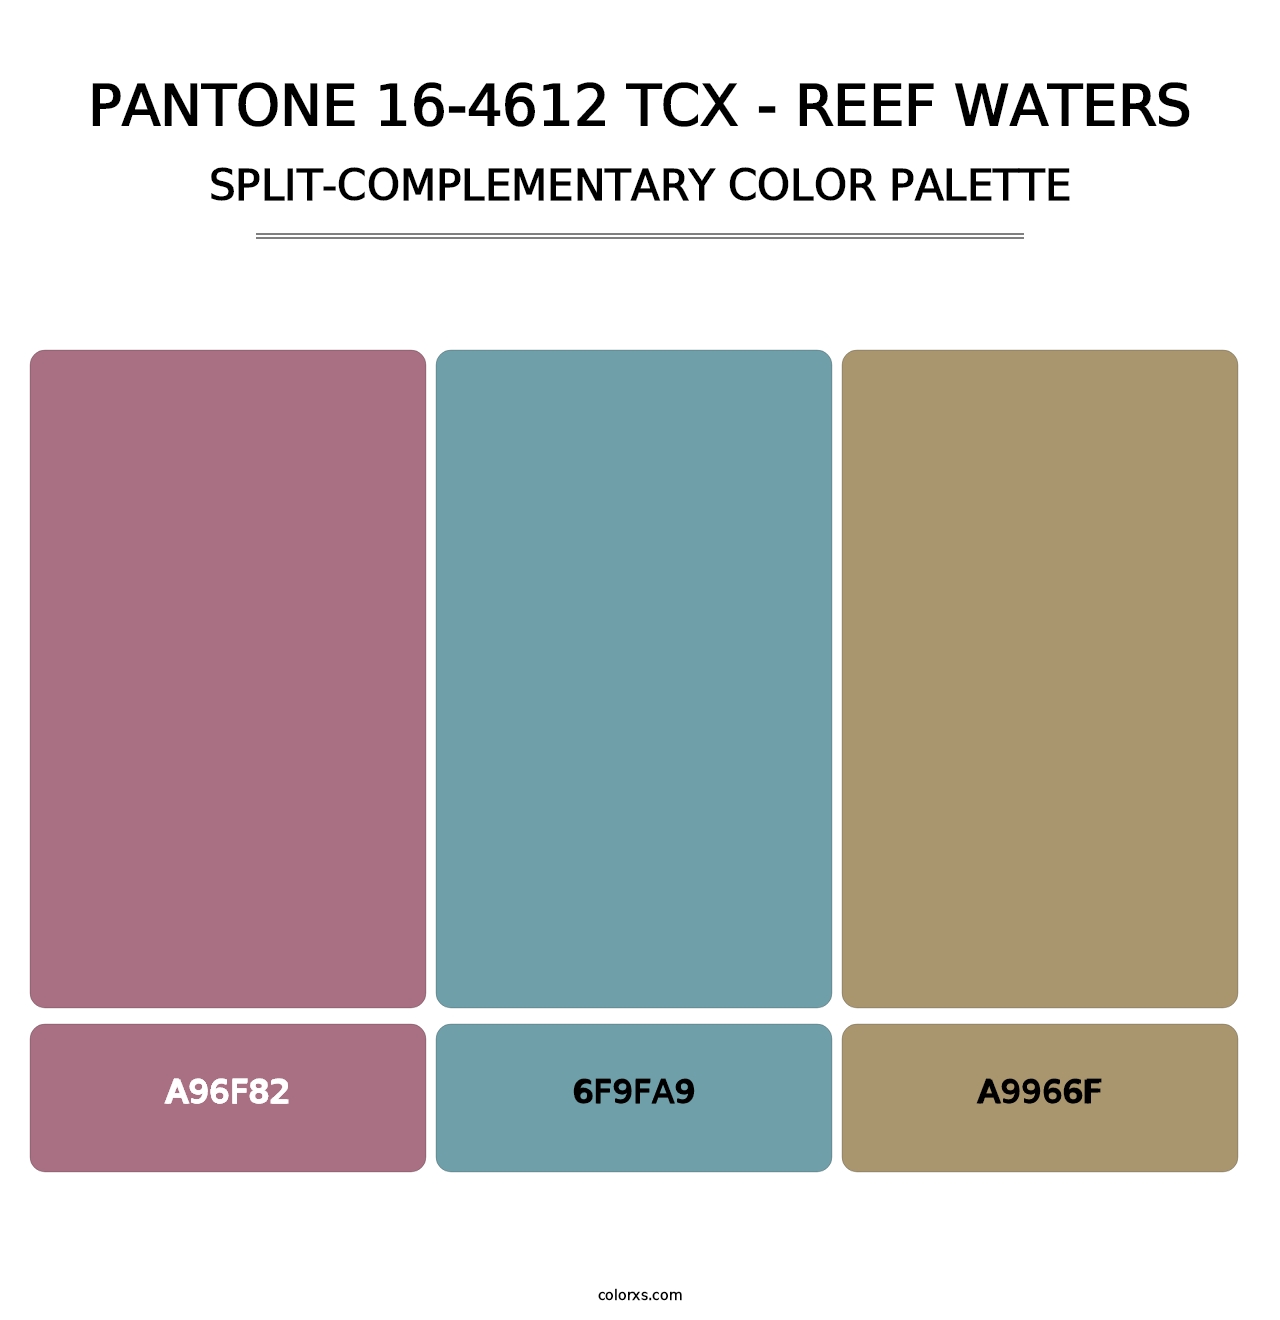 PANTONE 16-4612 TCX - Reef Waters - Split-Complementary Color Palette